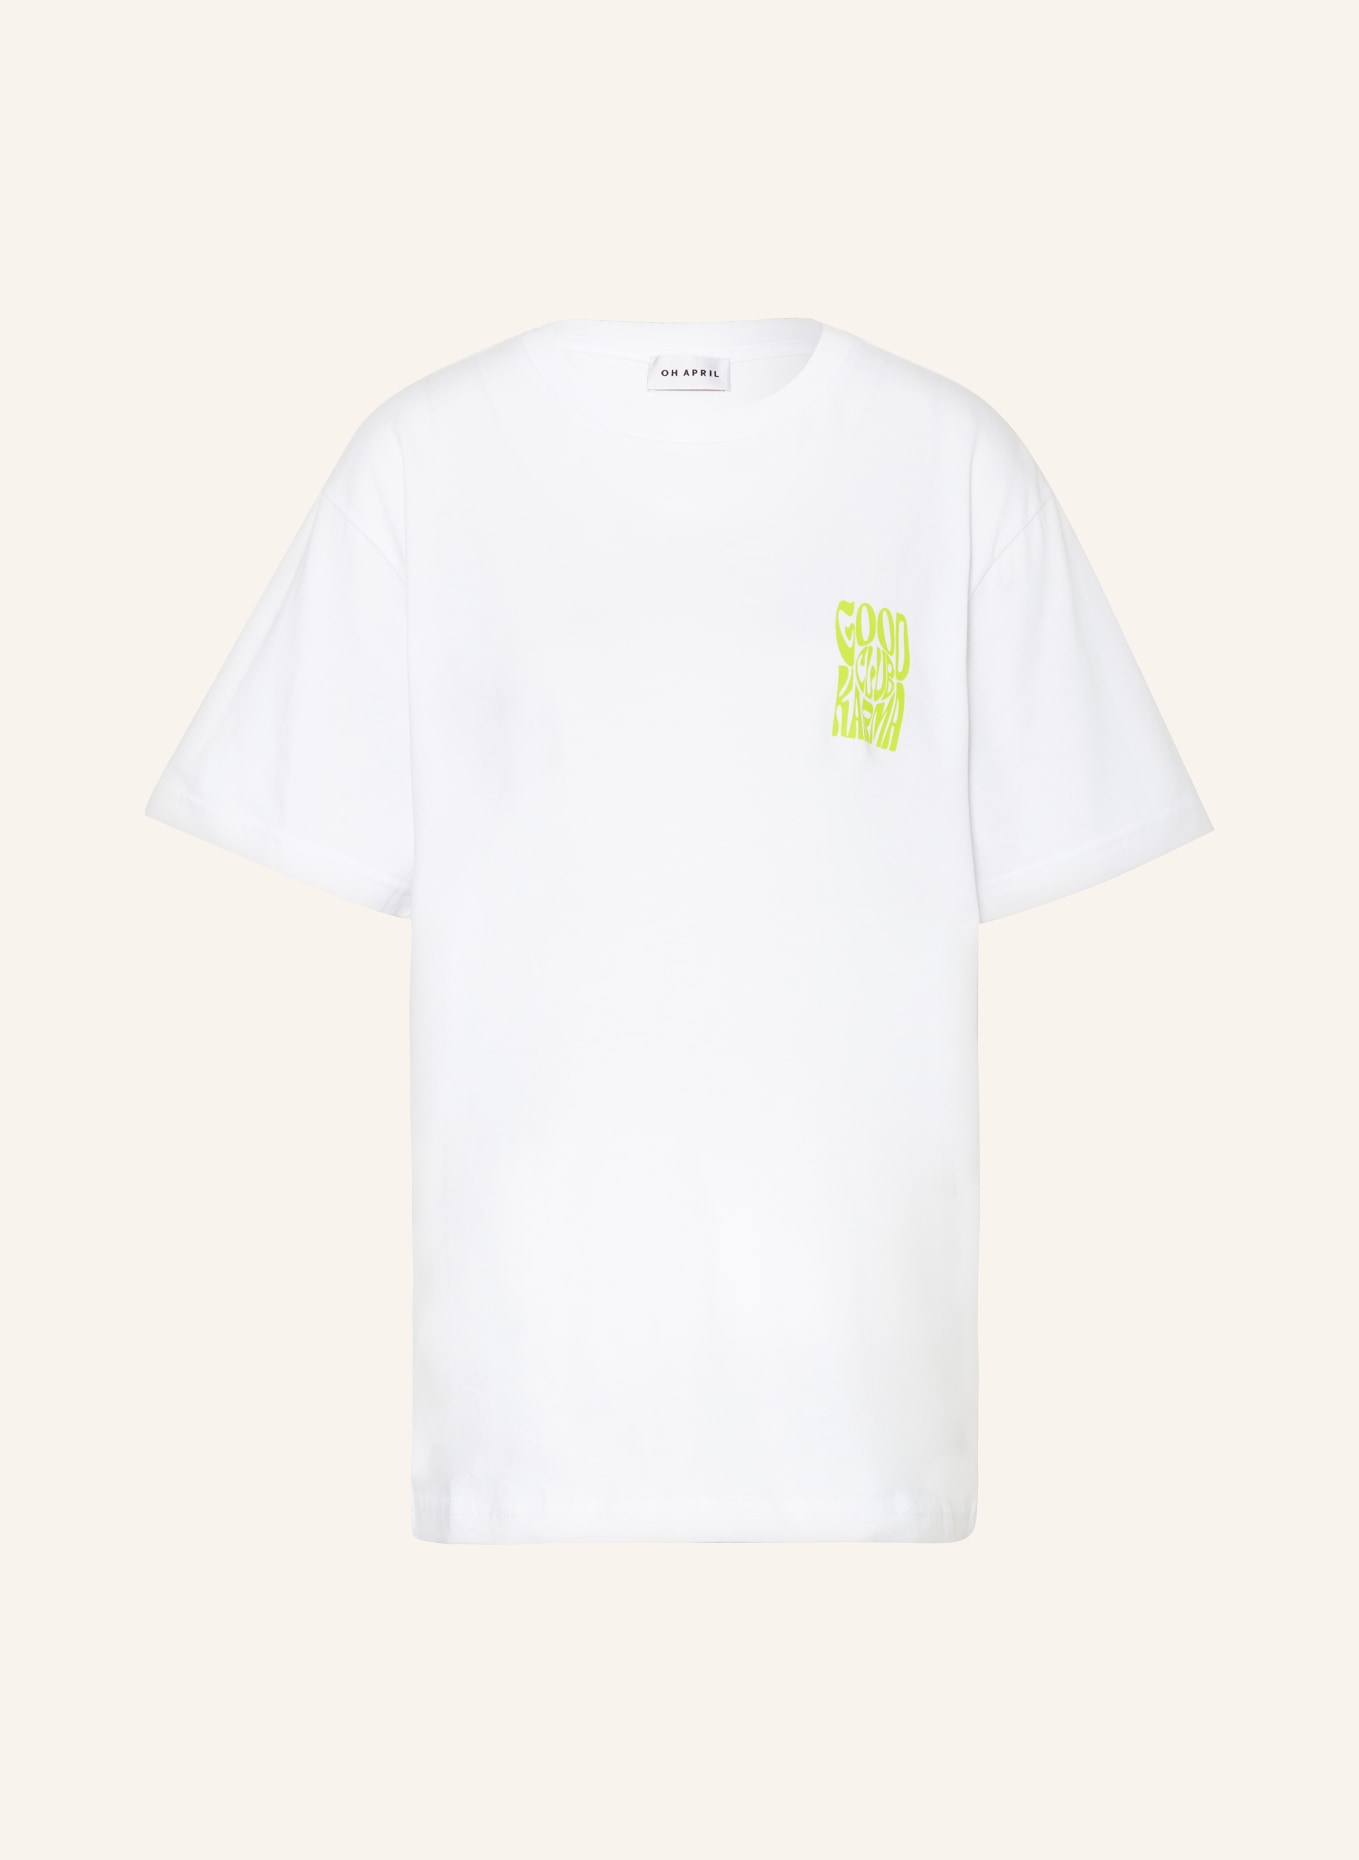 OH APRIL T-Shirt BOYFRIEND, Farbe: WEISS/ GRÜN (Bild 1)